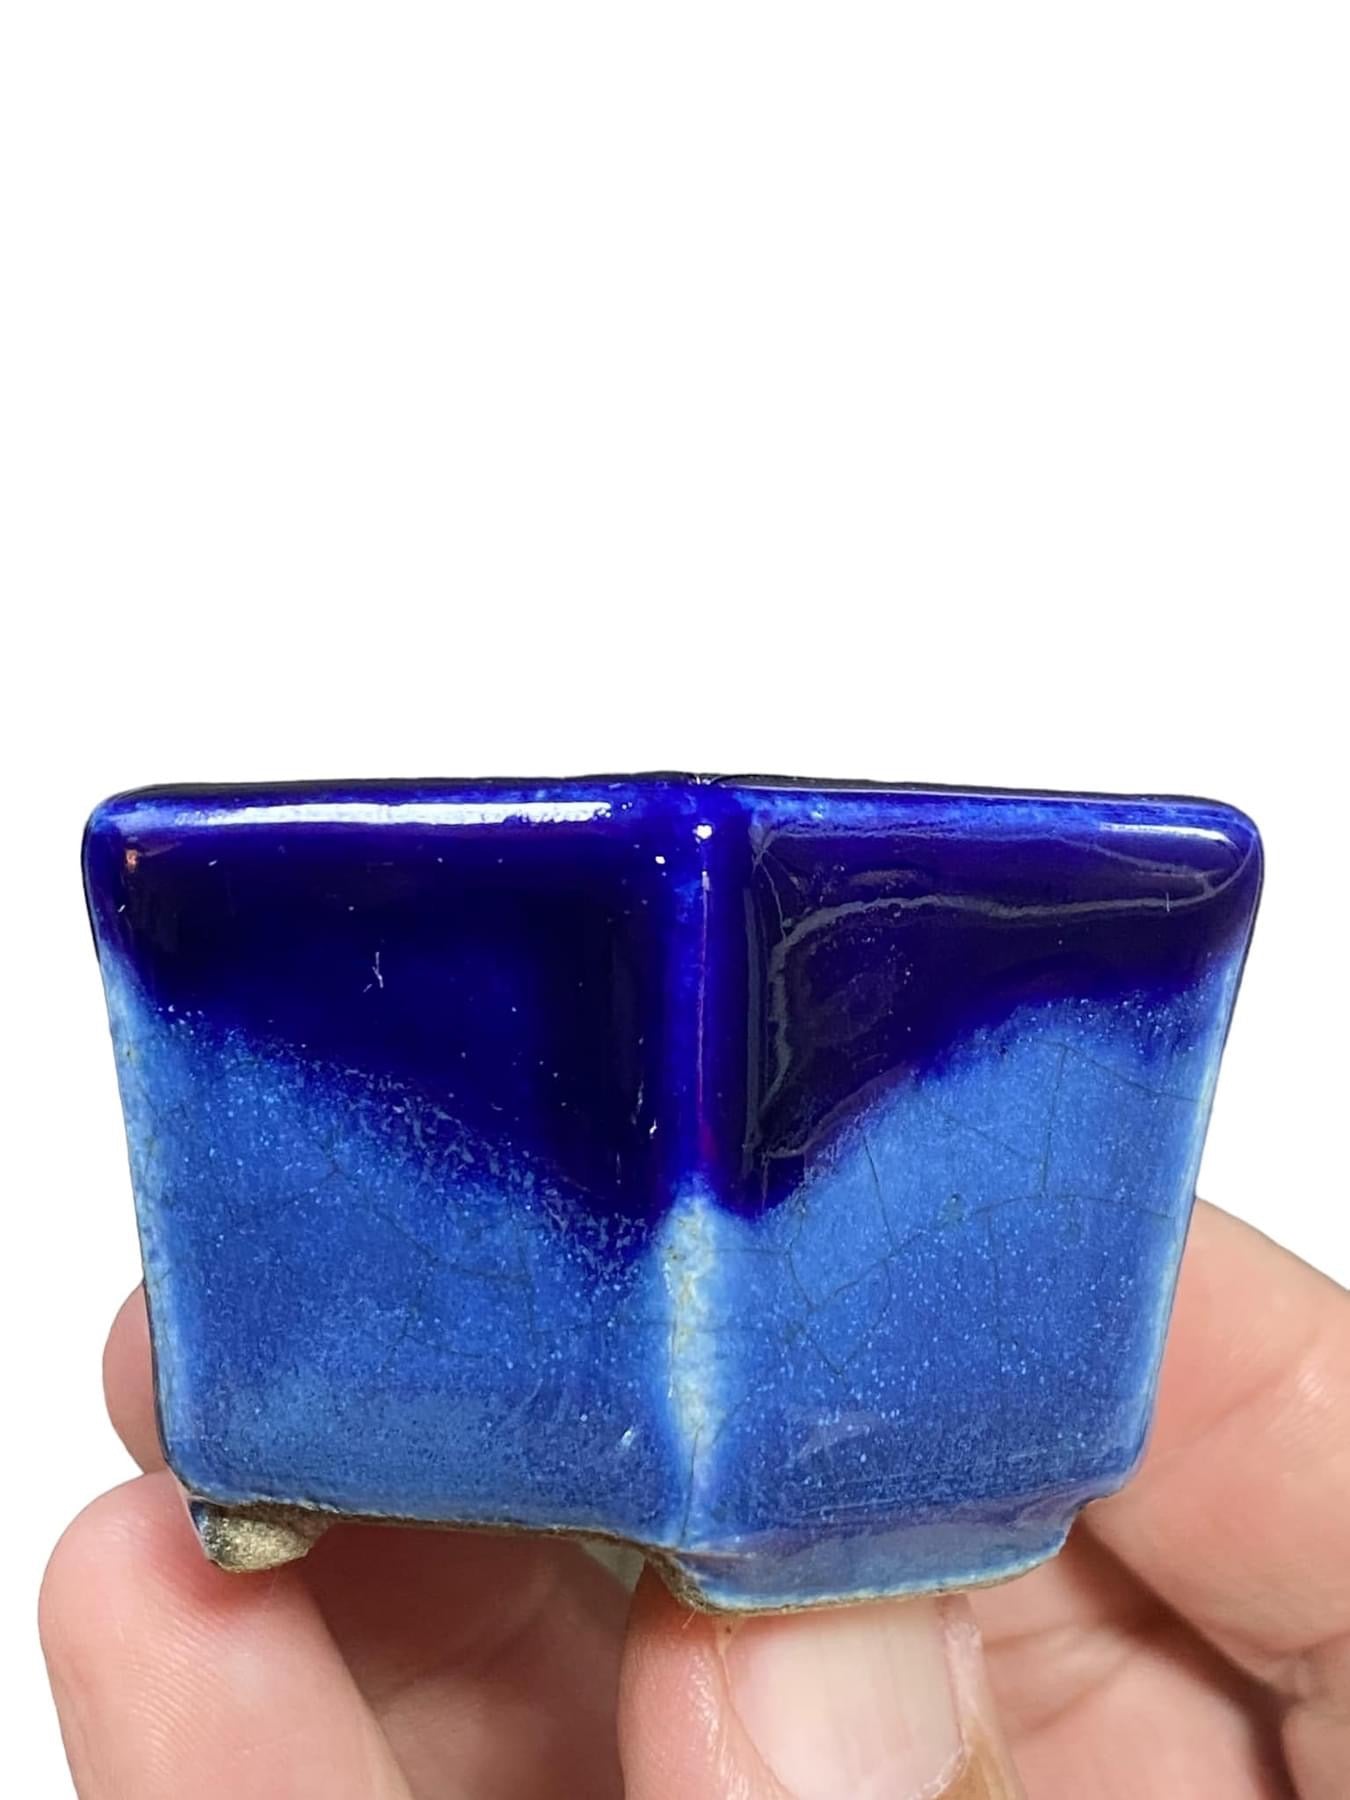 Satomi Terahata - Stellar Two-tone Blue Glazed Bonsai or Accent Pot (2-1/4” wide)